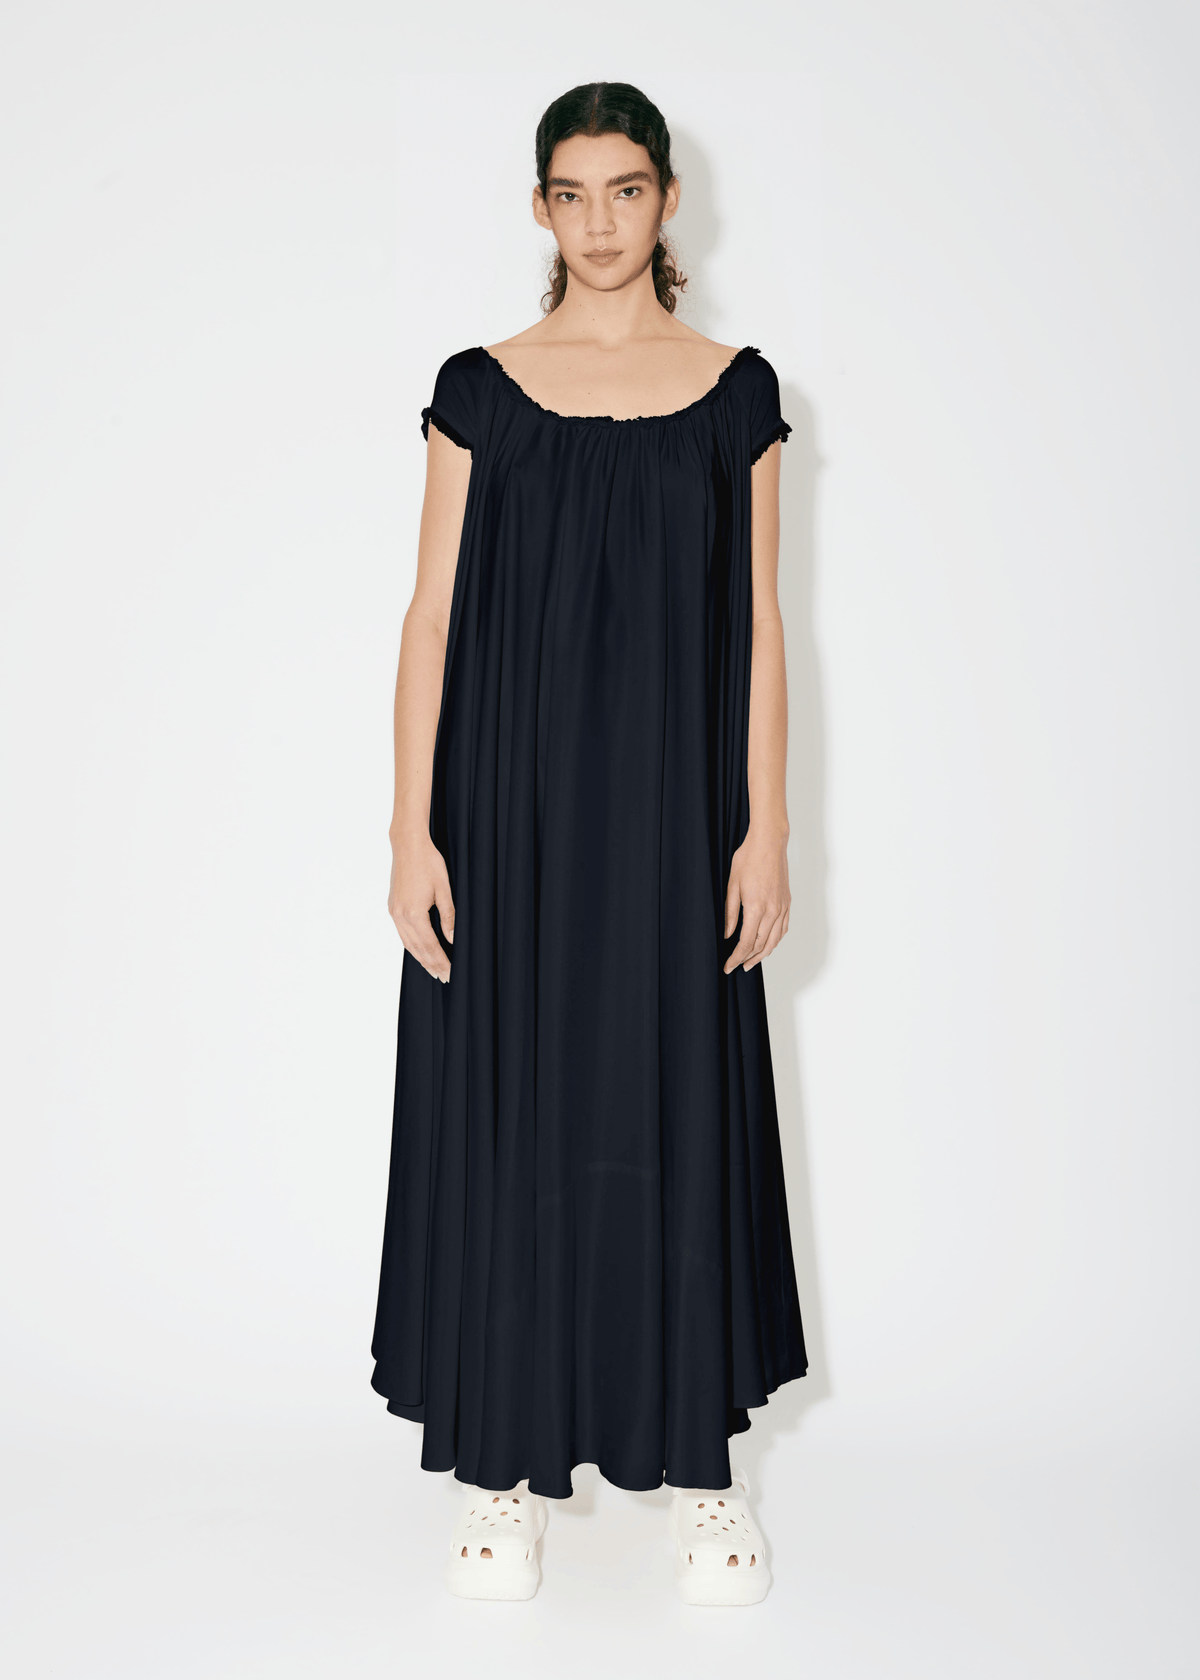 JaneBooke Lady of Shallot Dress in Black